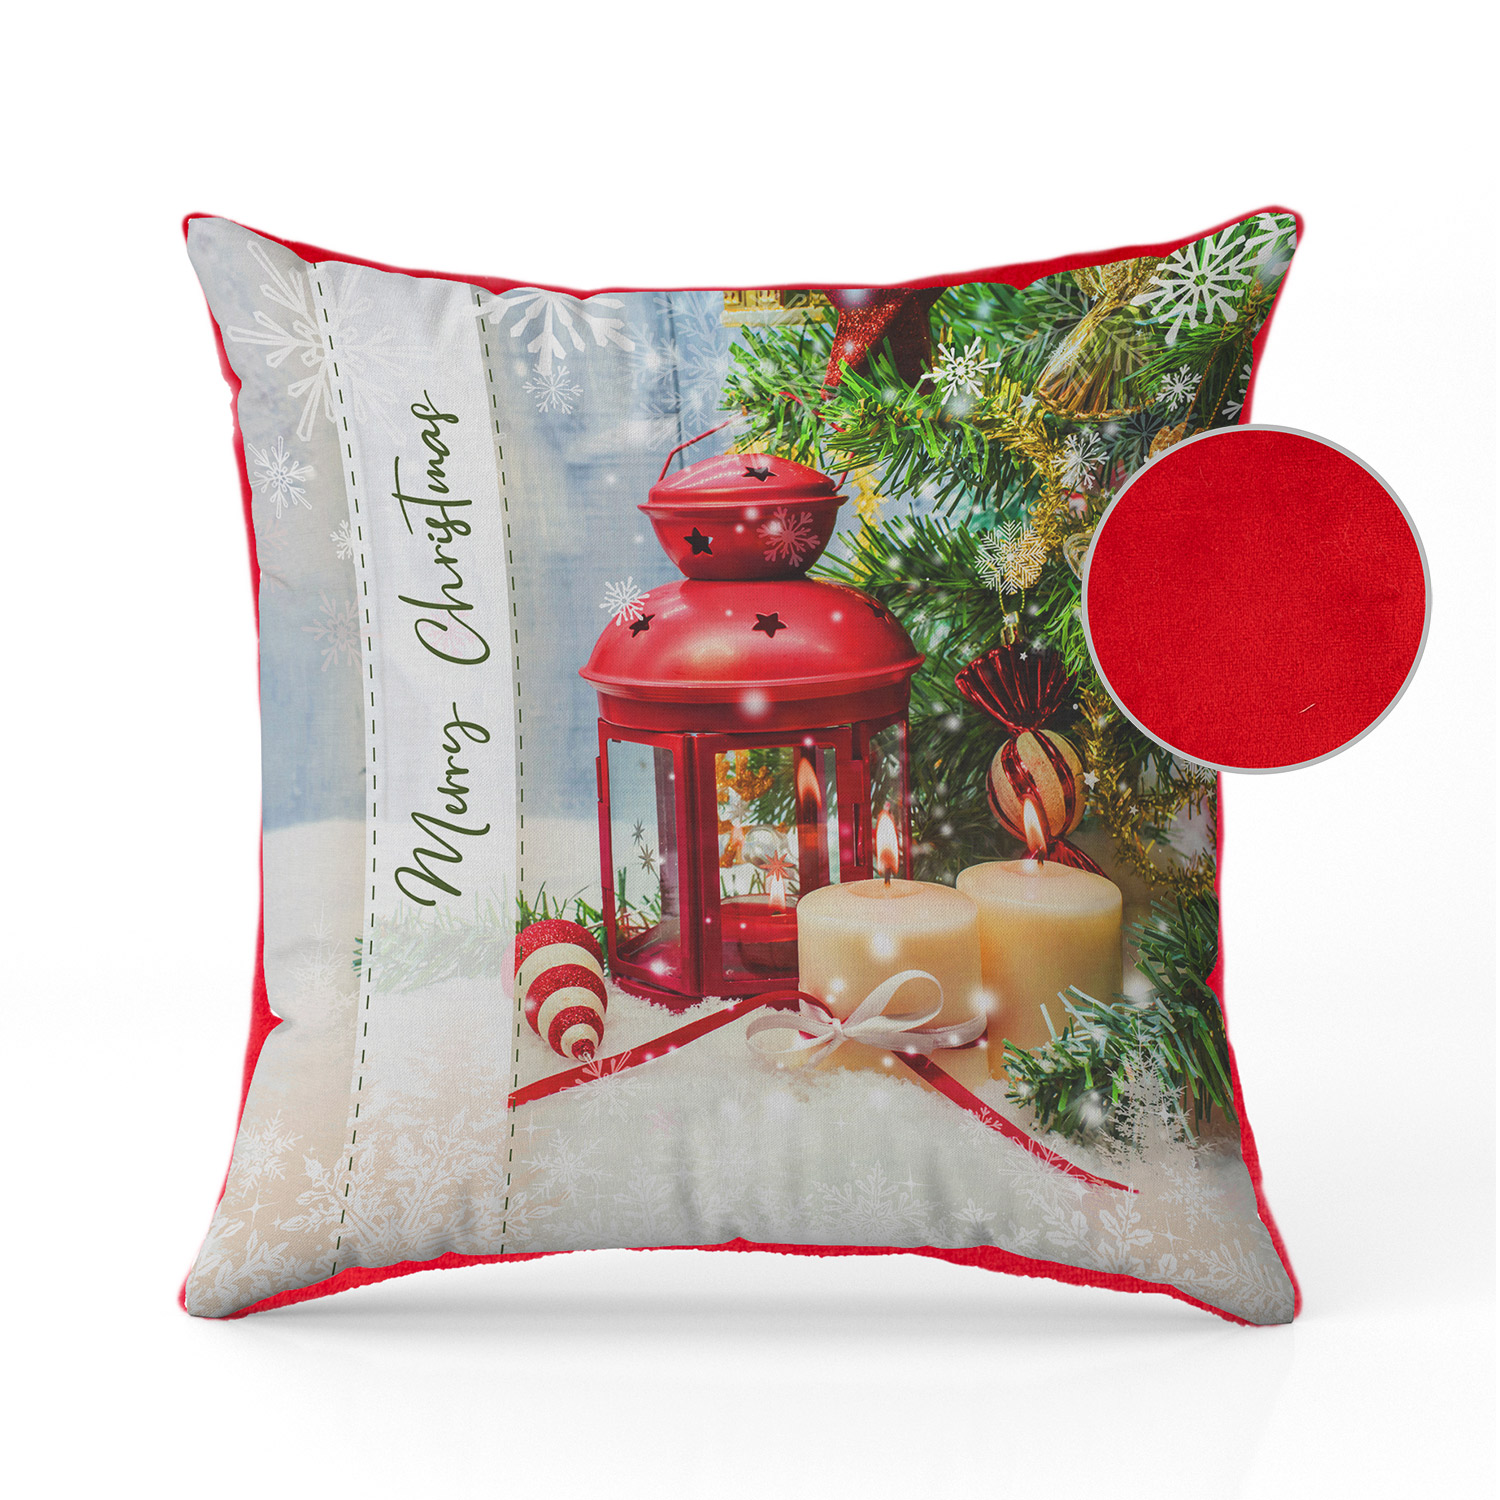 Christmas pillow with lantern